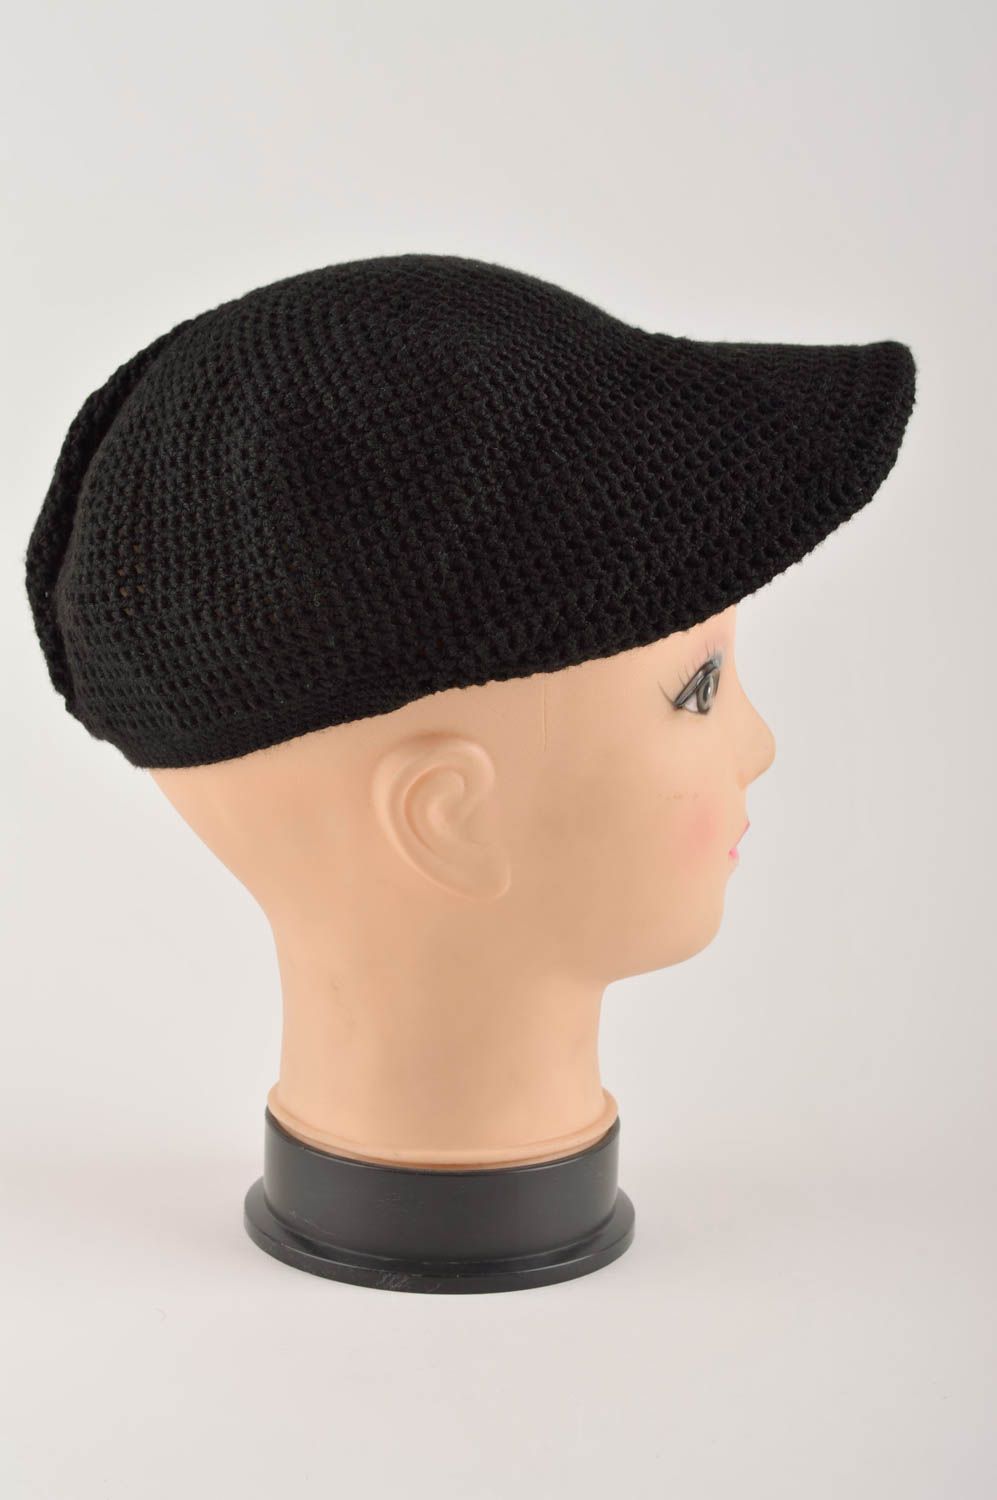 Handmade hat designer cap unusual gift ideas women hat summer hat for girls photo 4